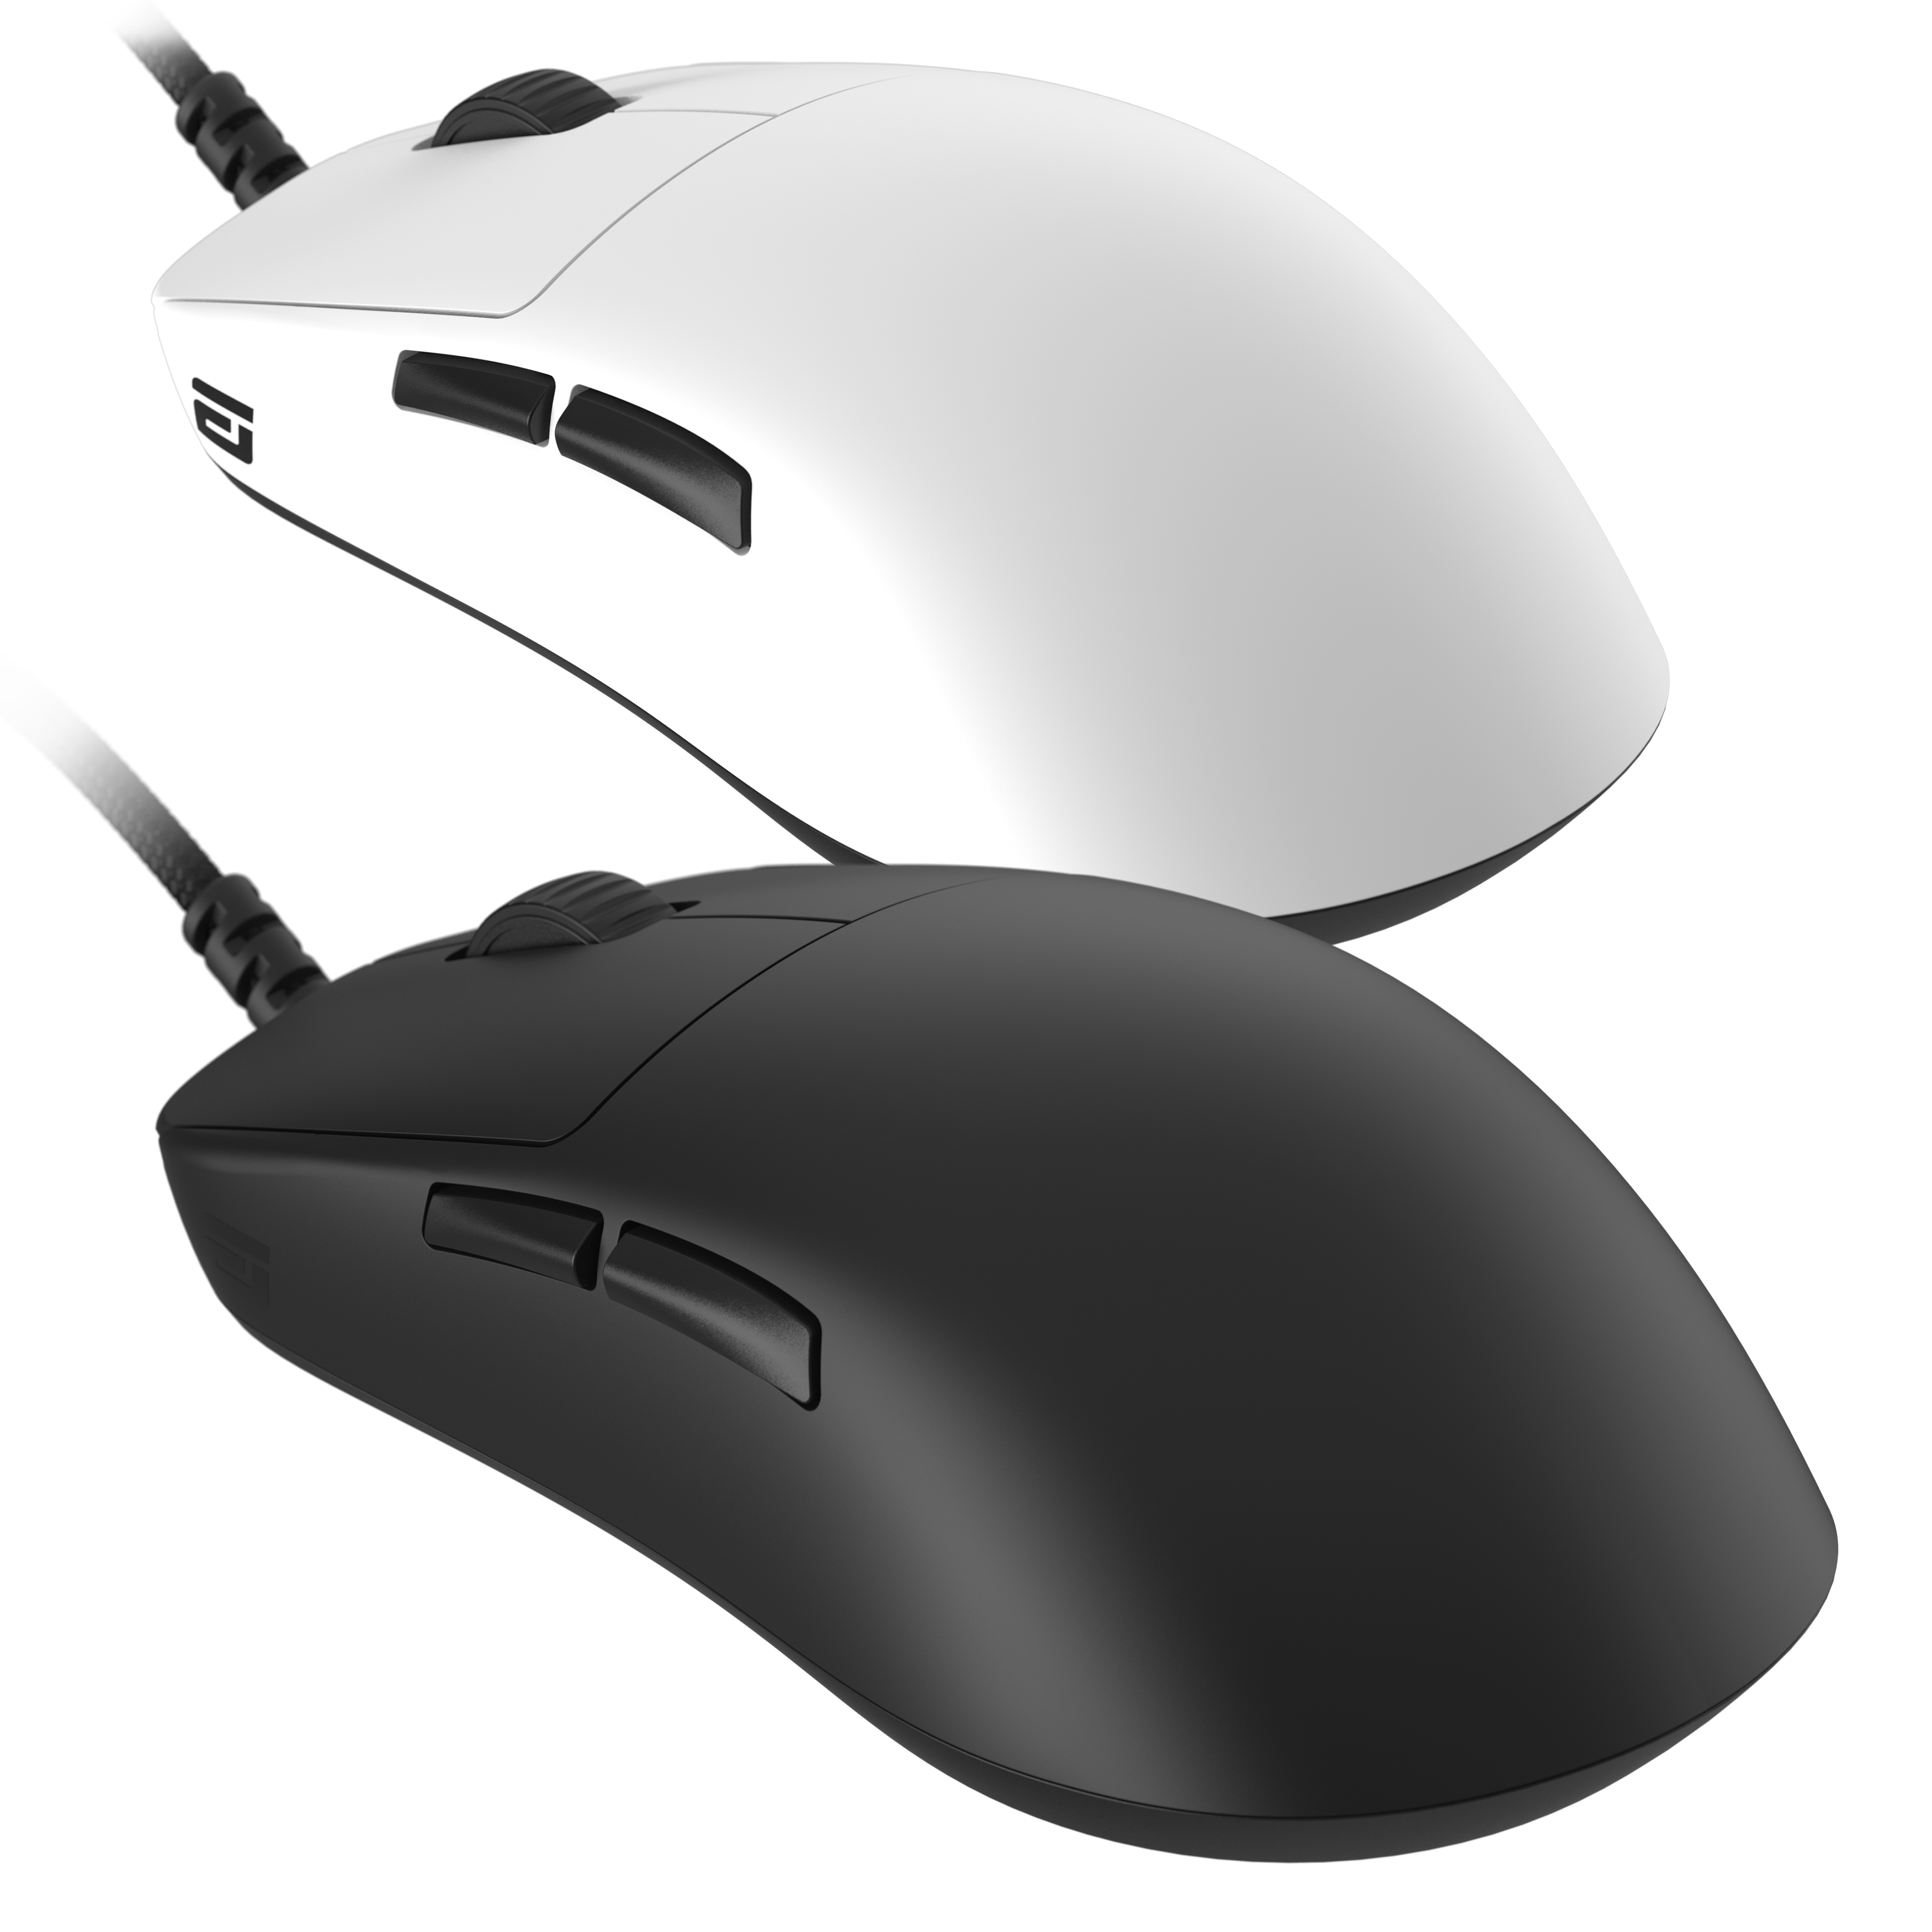 Endgame Gear OP1 8k Gaming Mouse Black or White